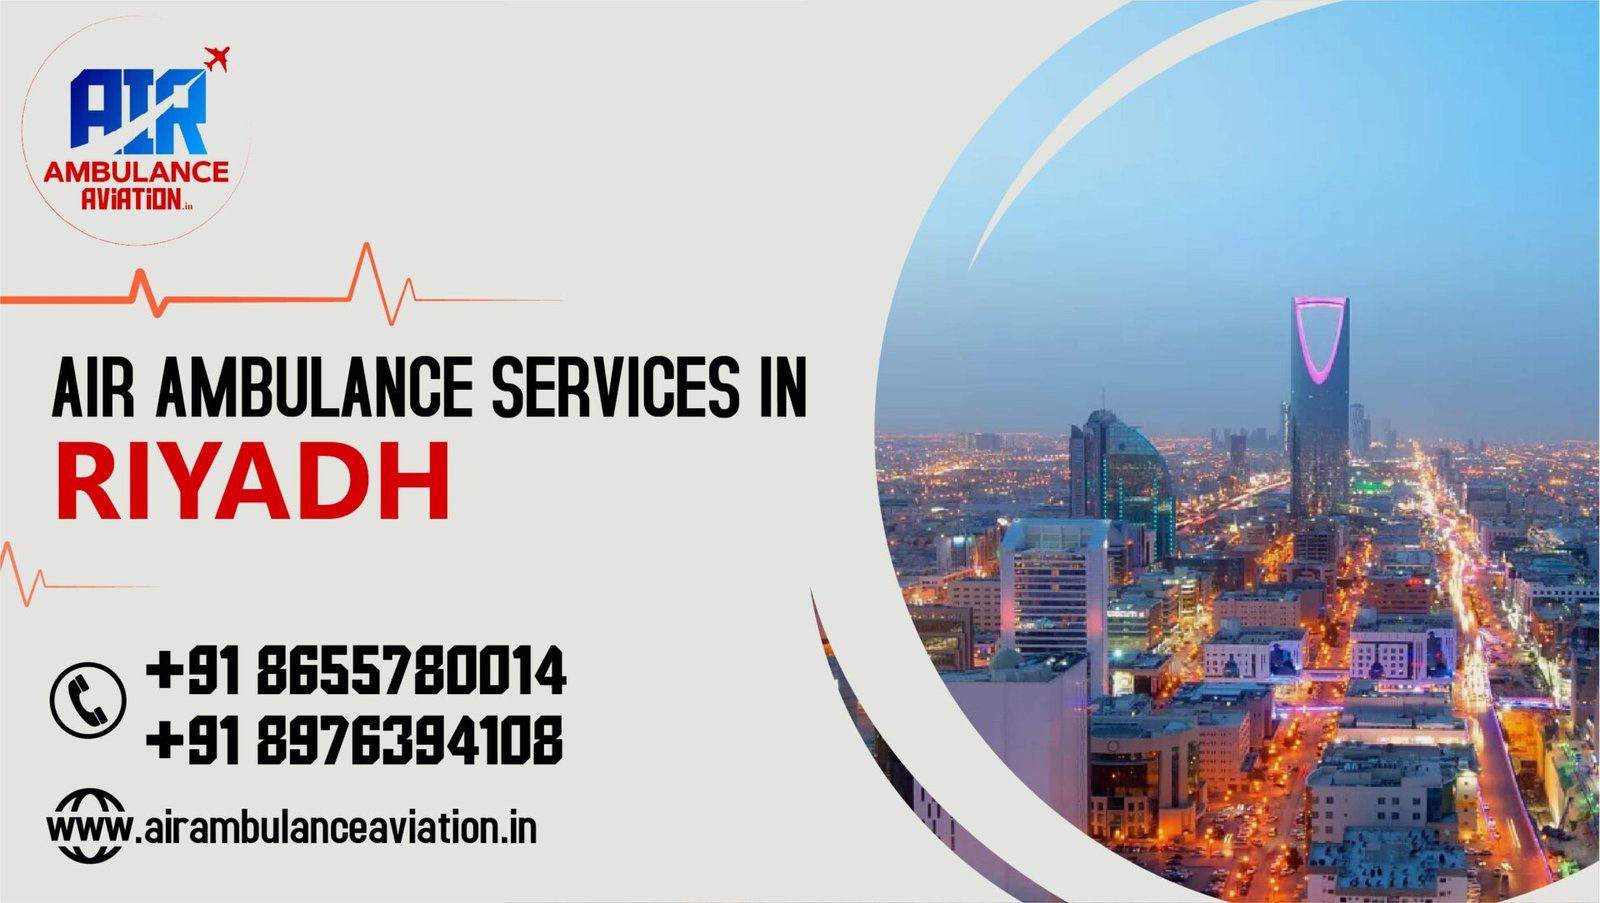 Air Ambulance Services in Riyadh